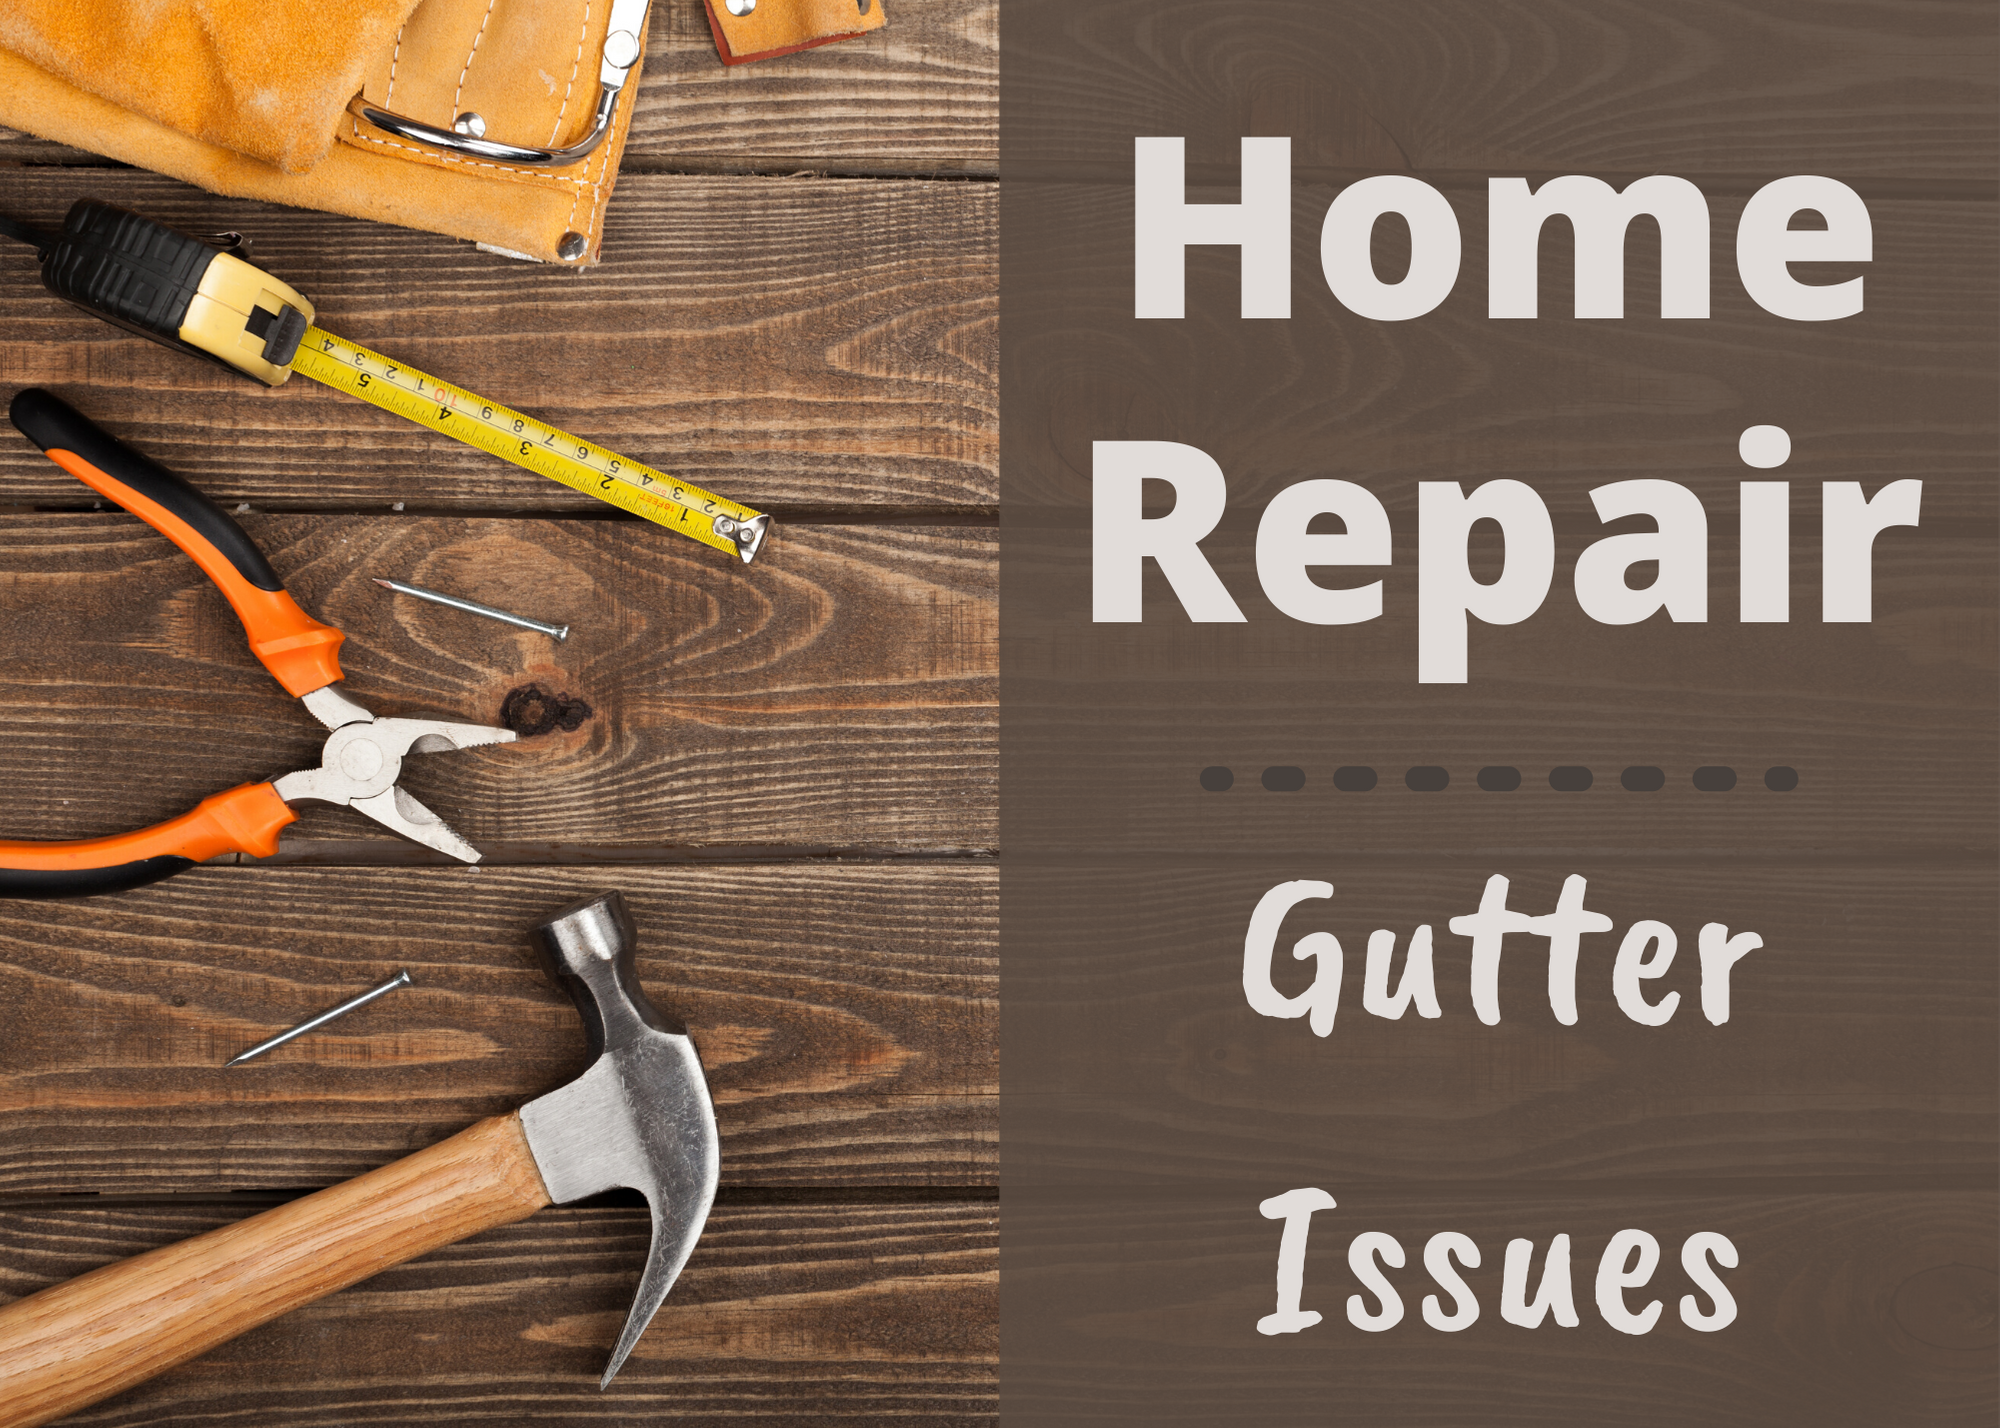 Home Repair - Gutter Issues